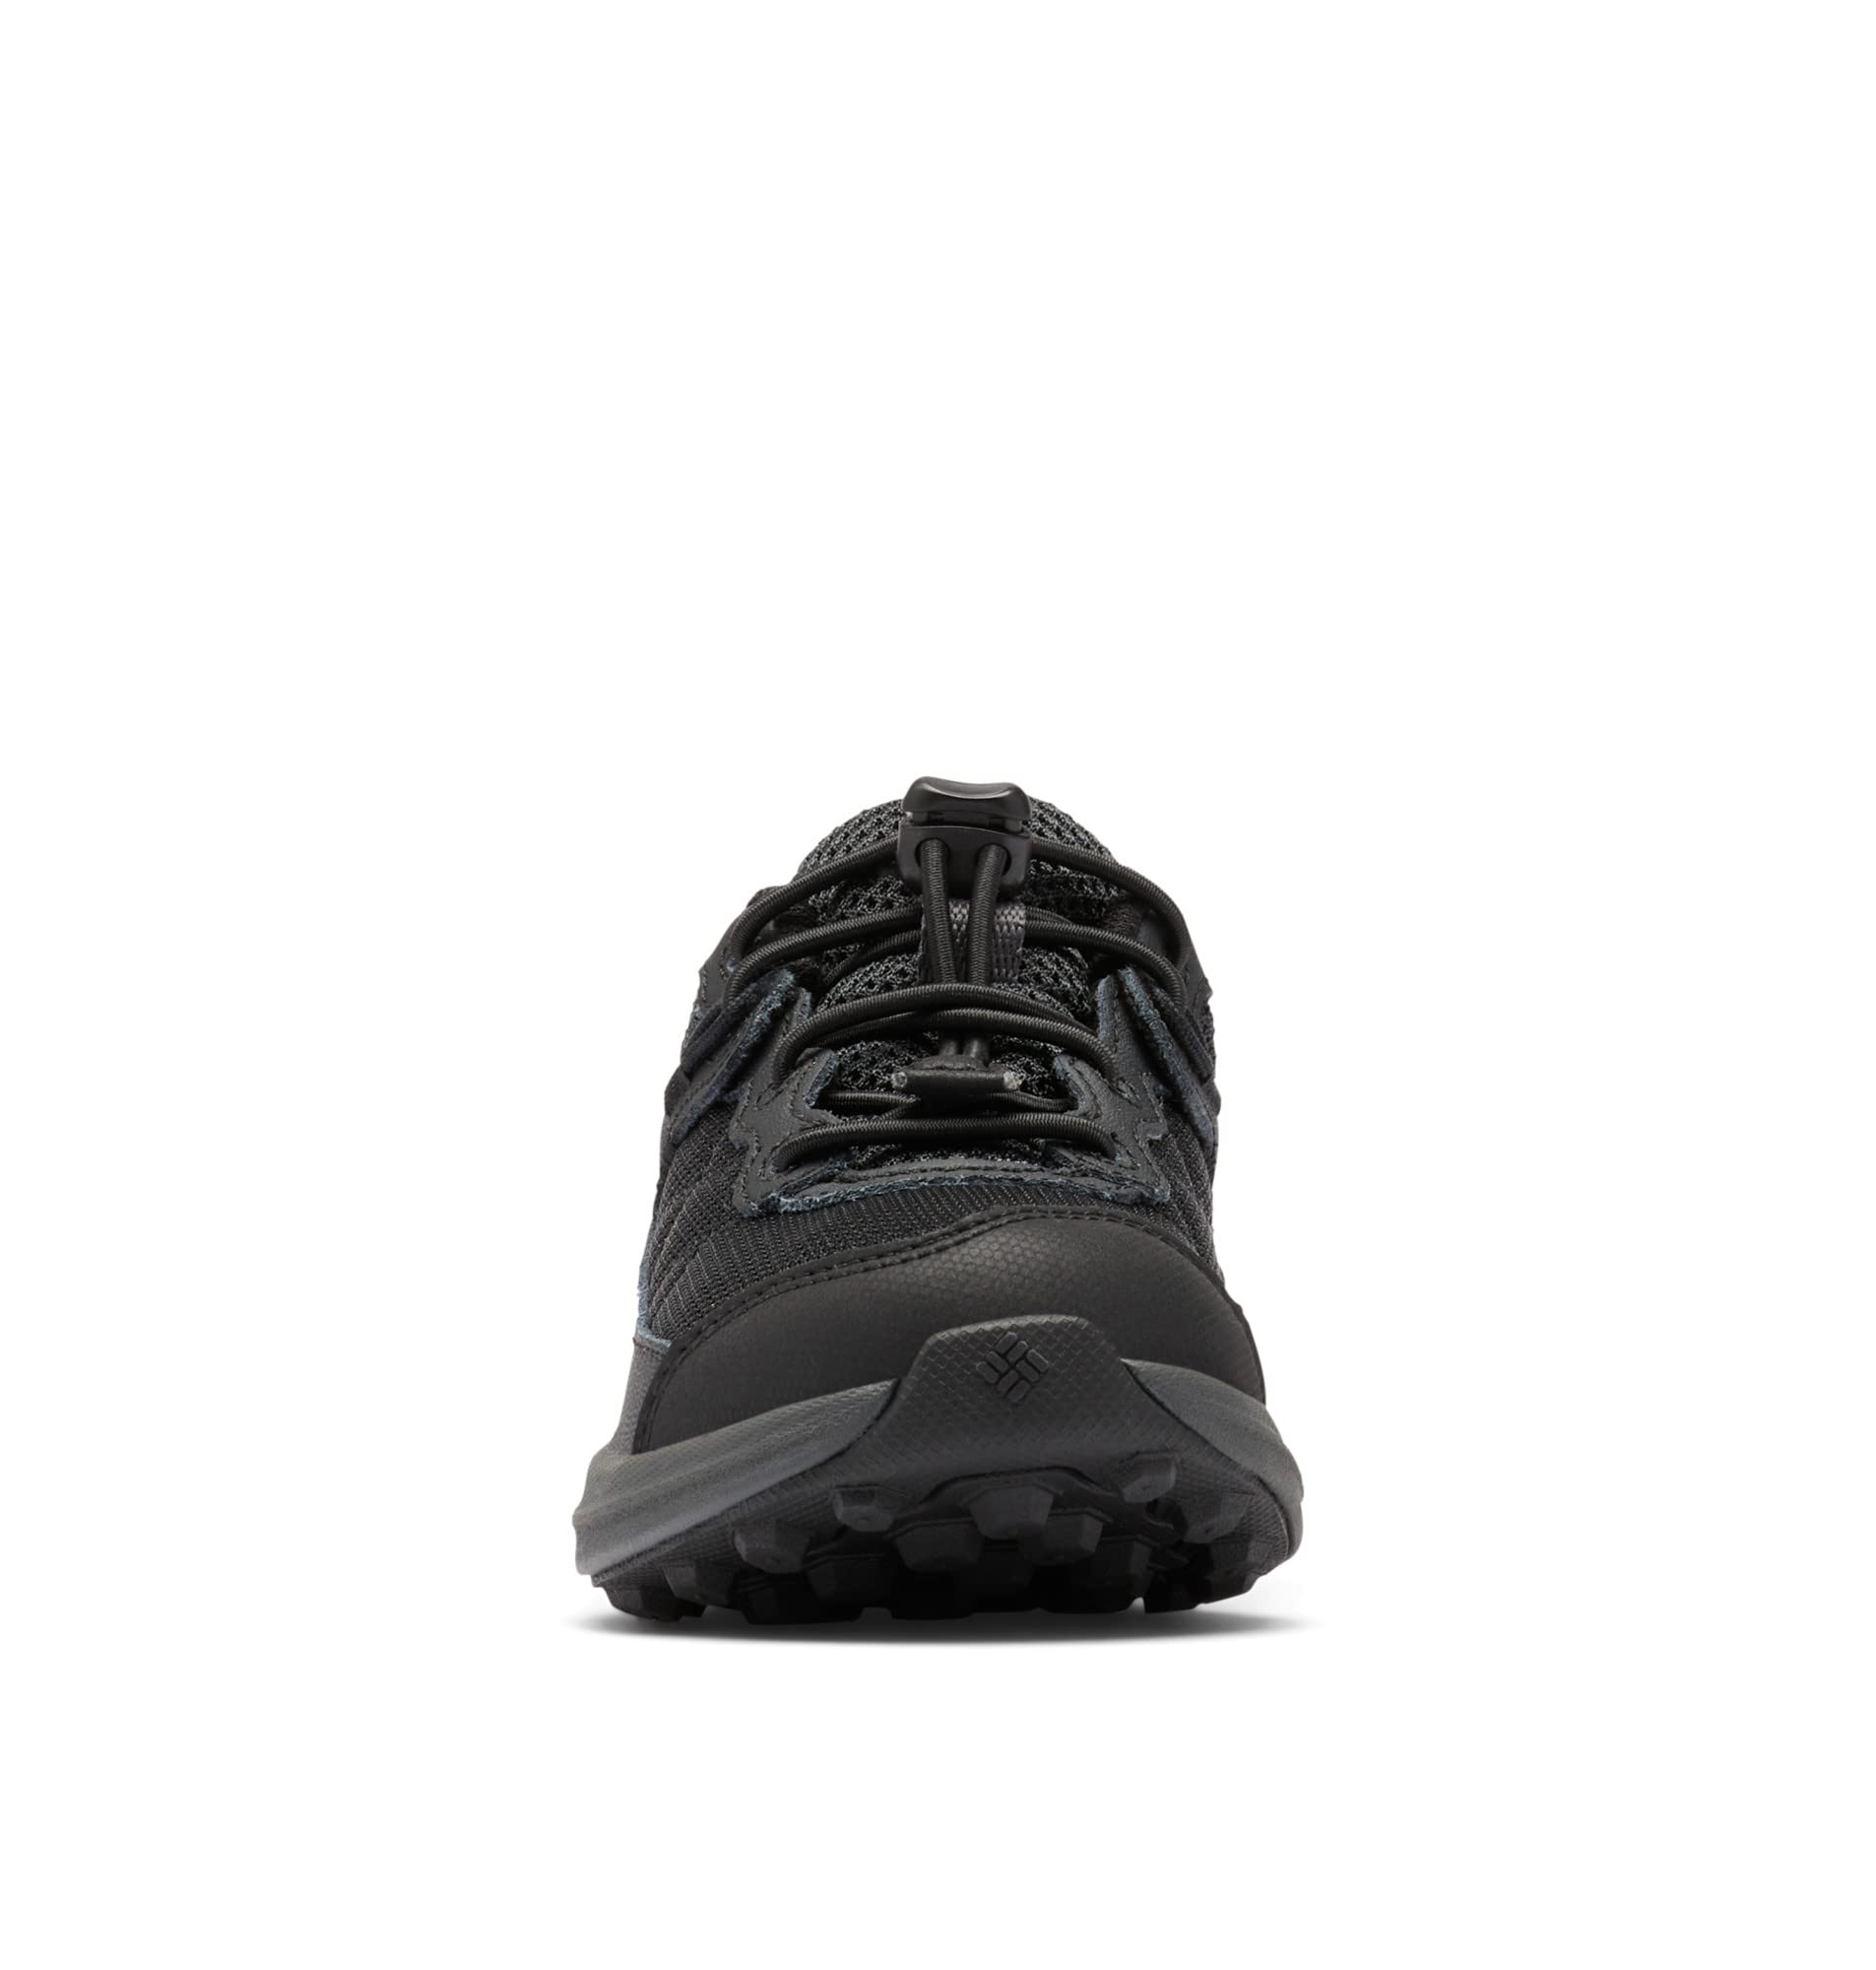 Columbia Unisex-Child Trailstorm Hiking Shoe